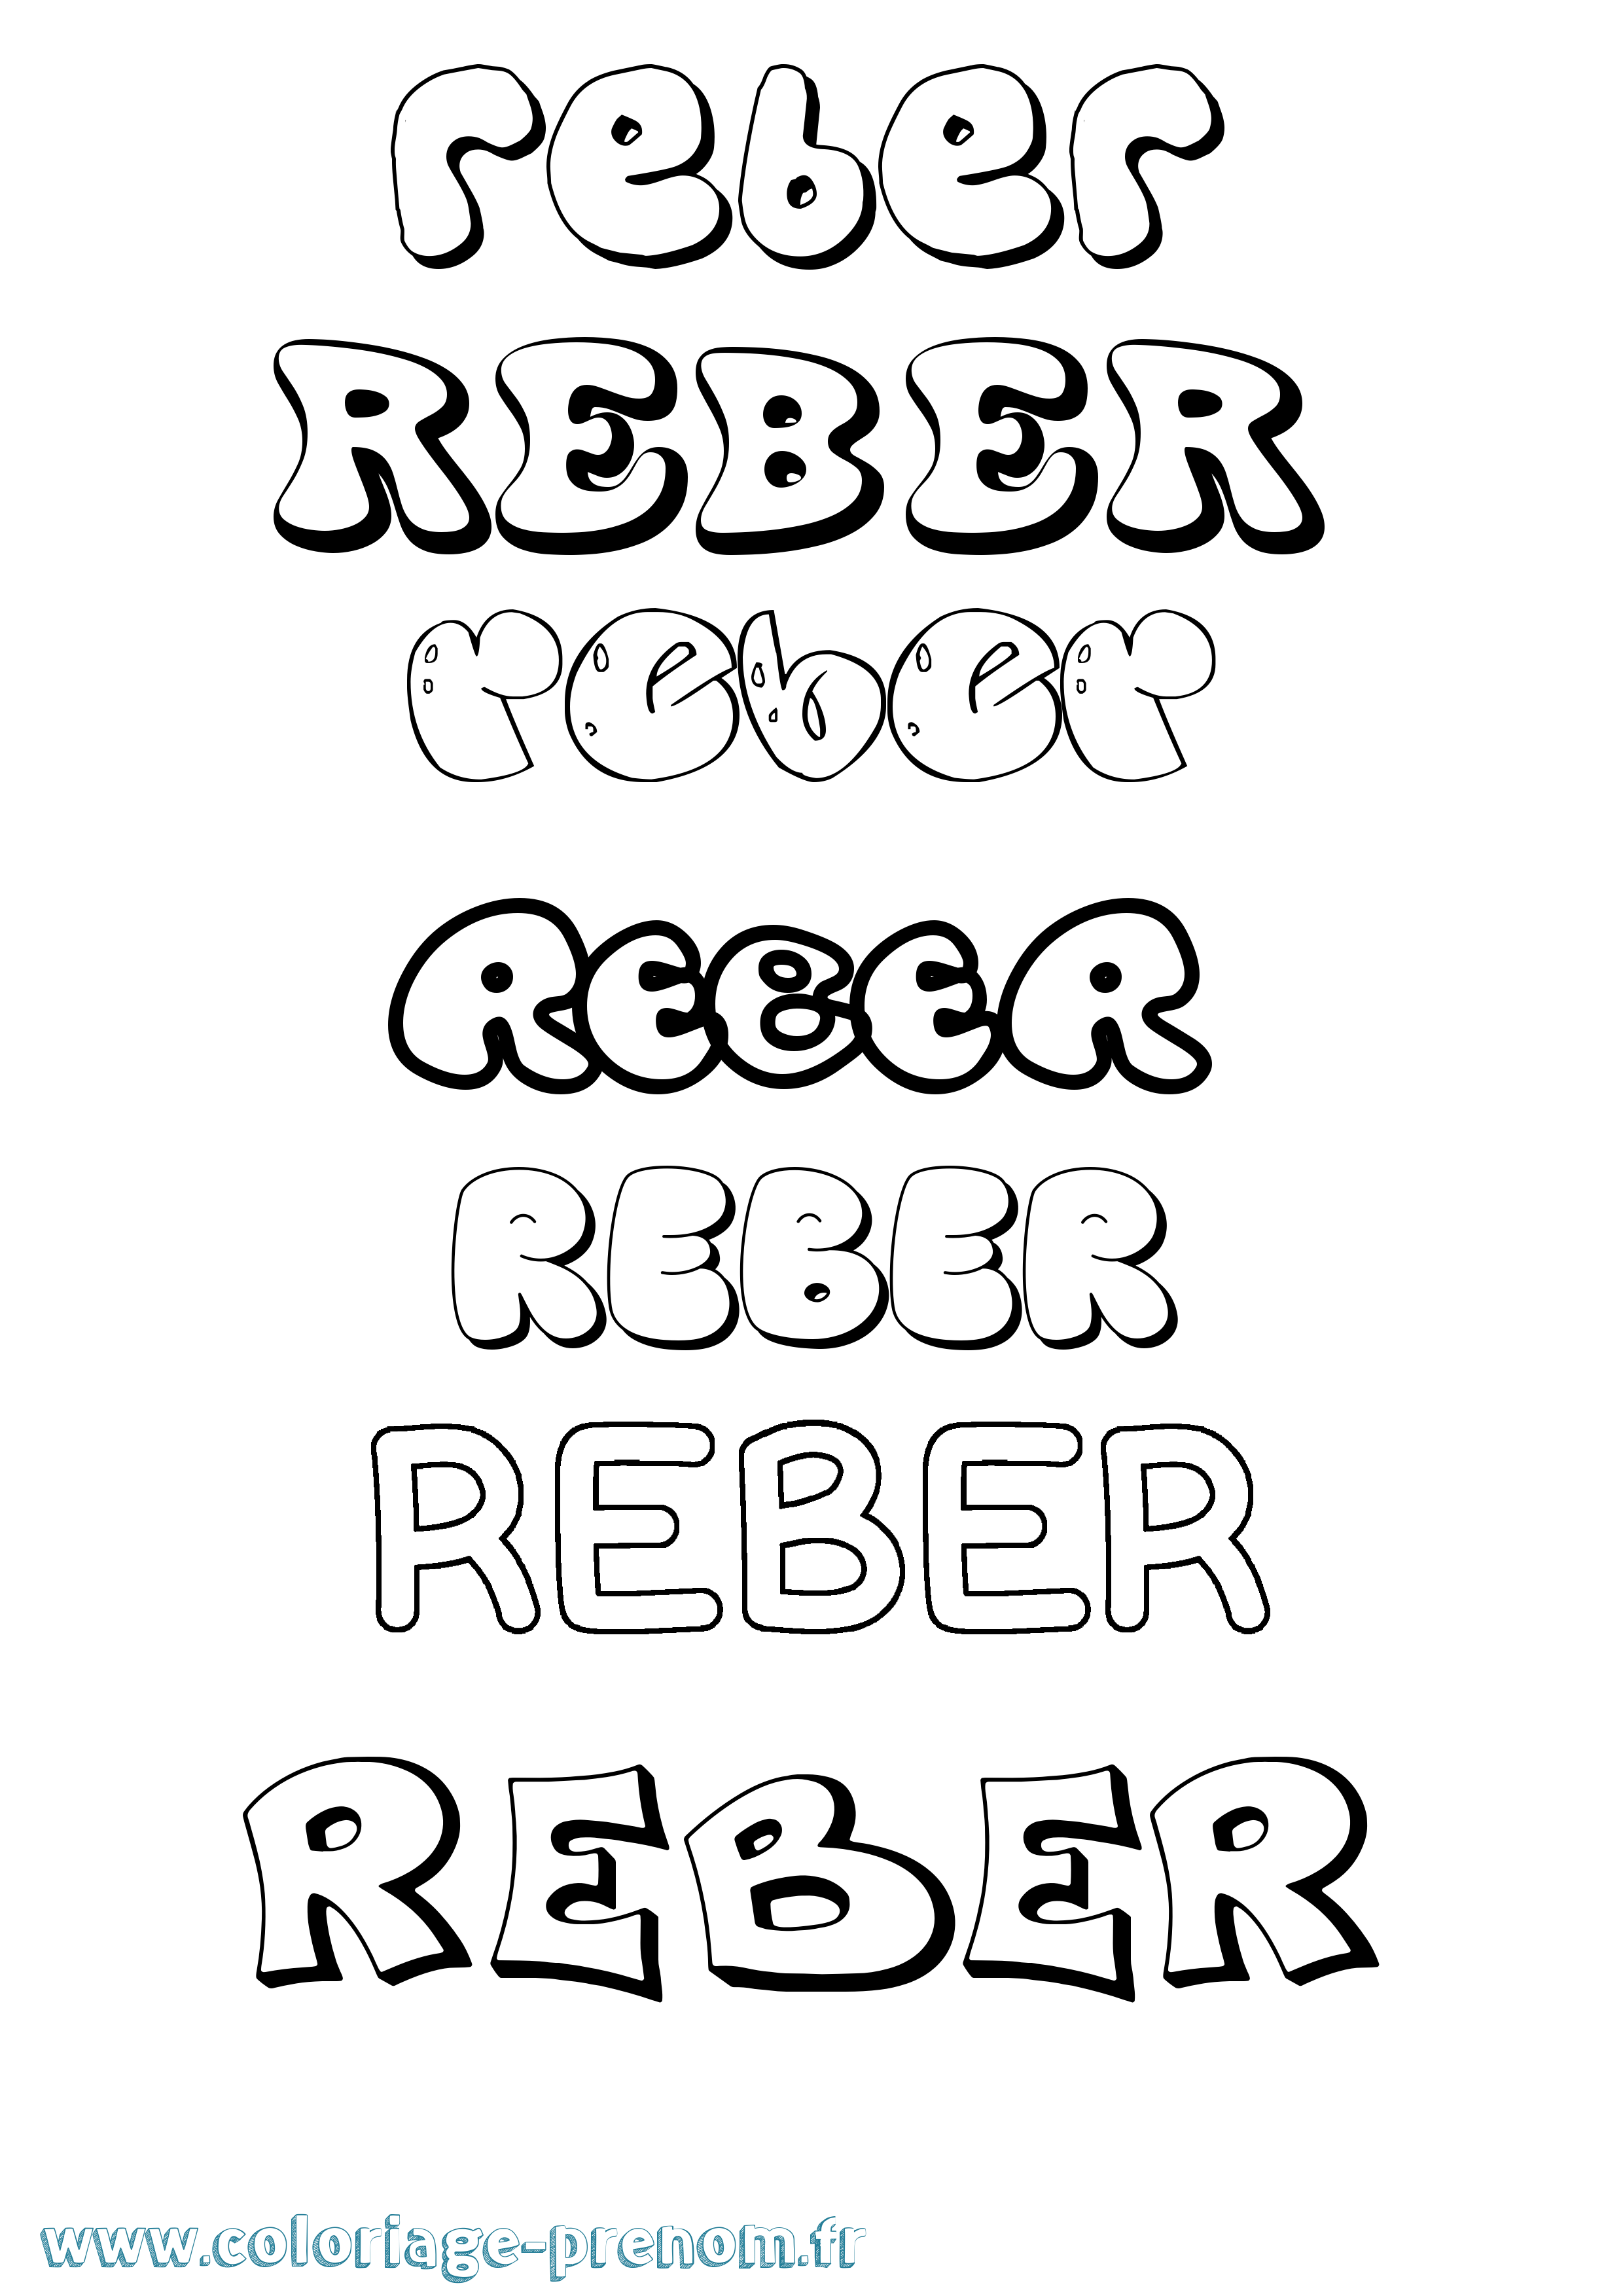 Coloriage prénom Reber Bubble